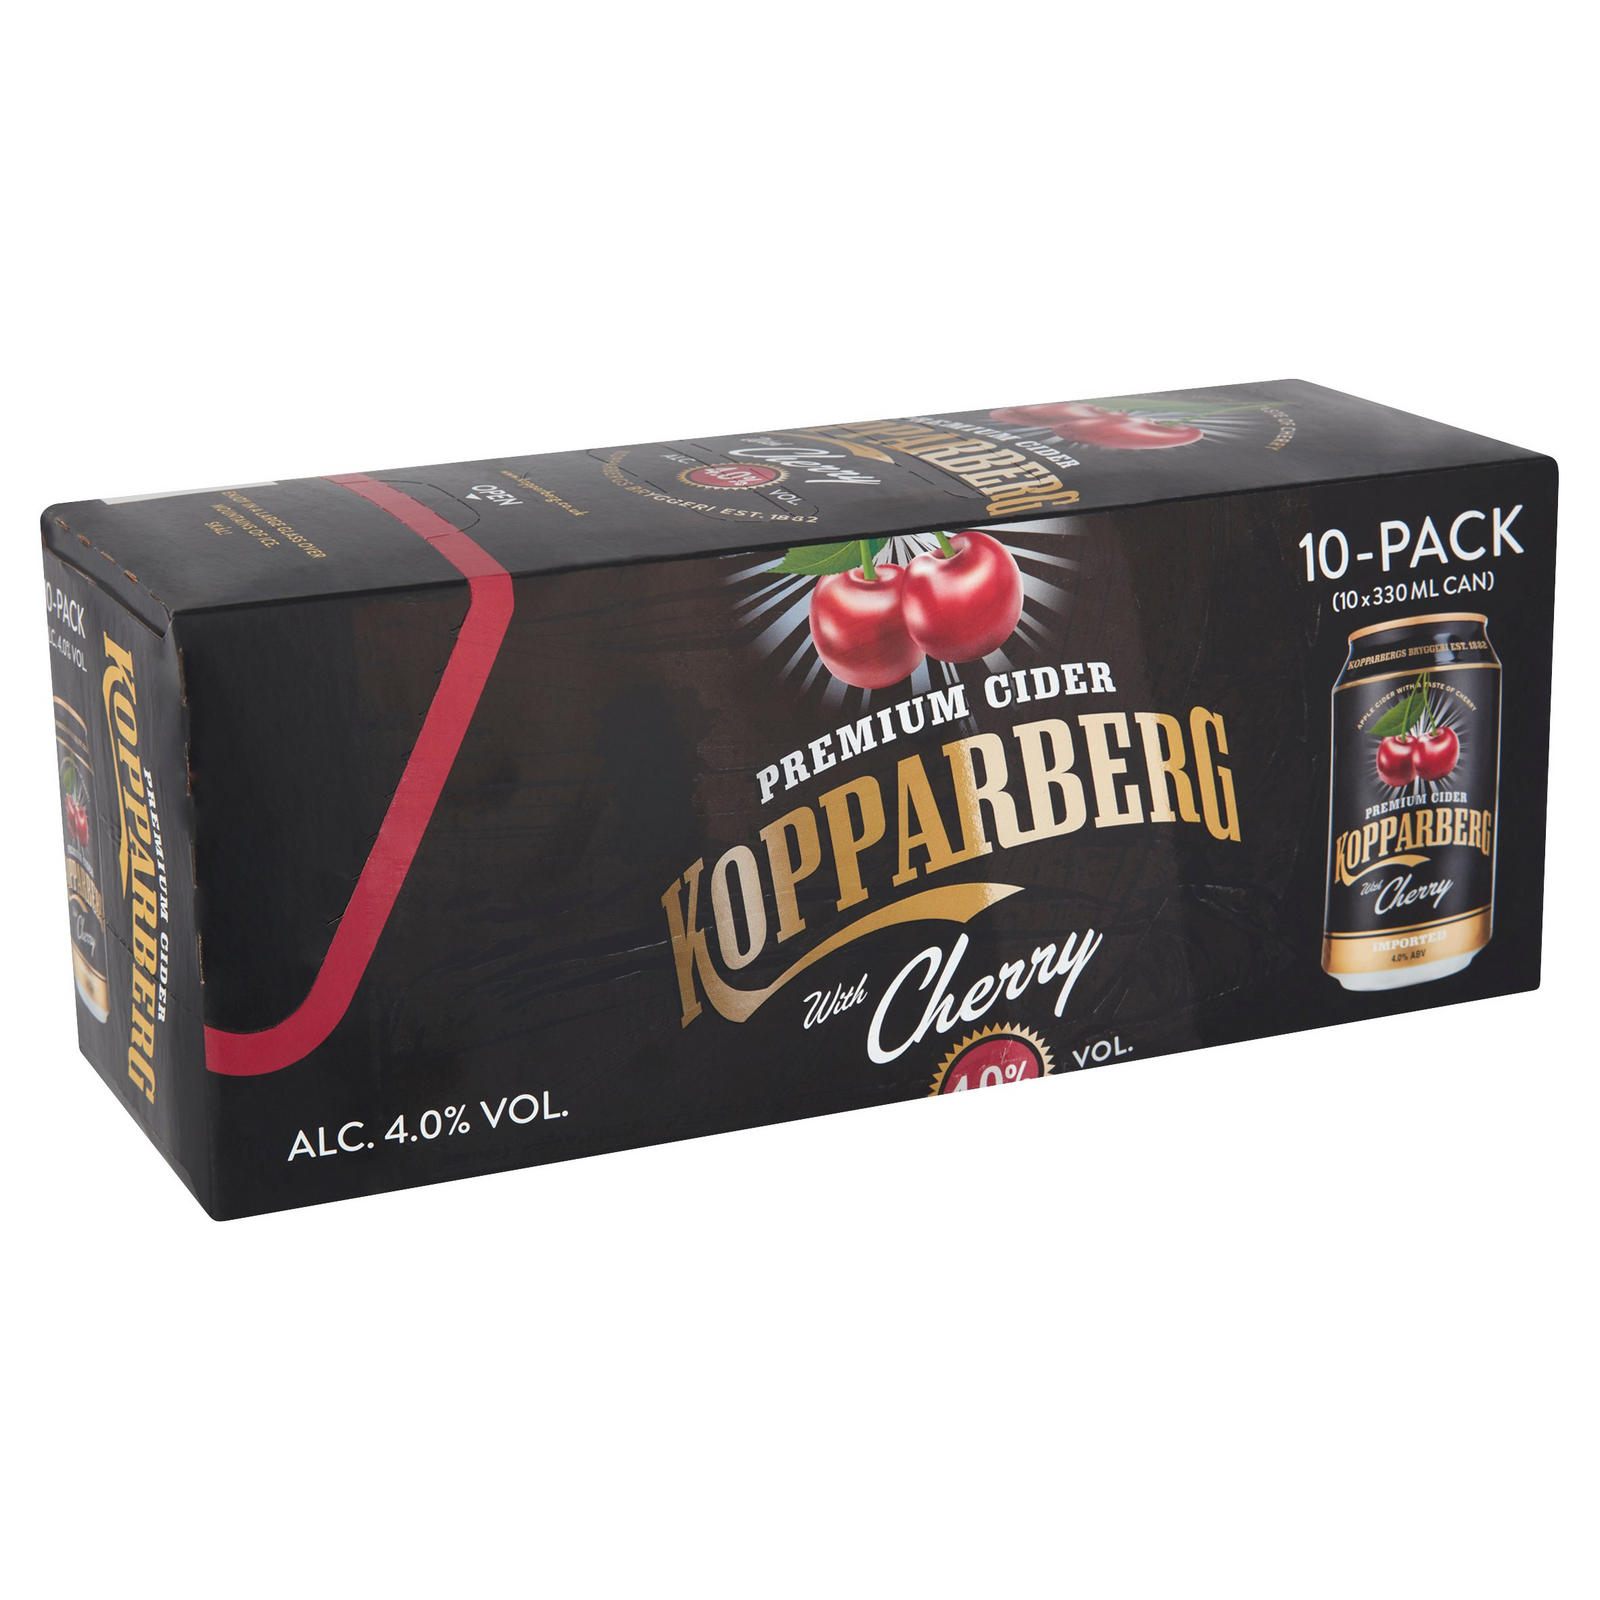 Kopparberg Premium Cider with Cherry 10 x 330ml | Cider | Iceland Foods